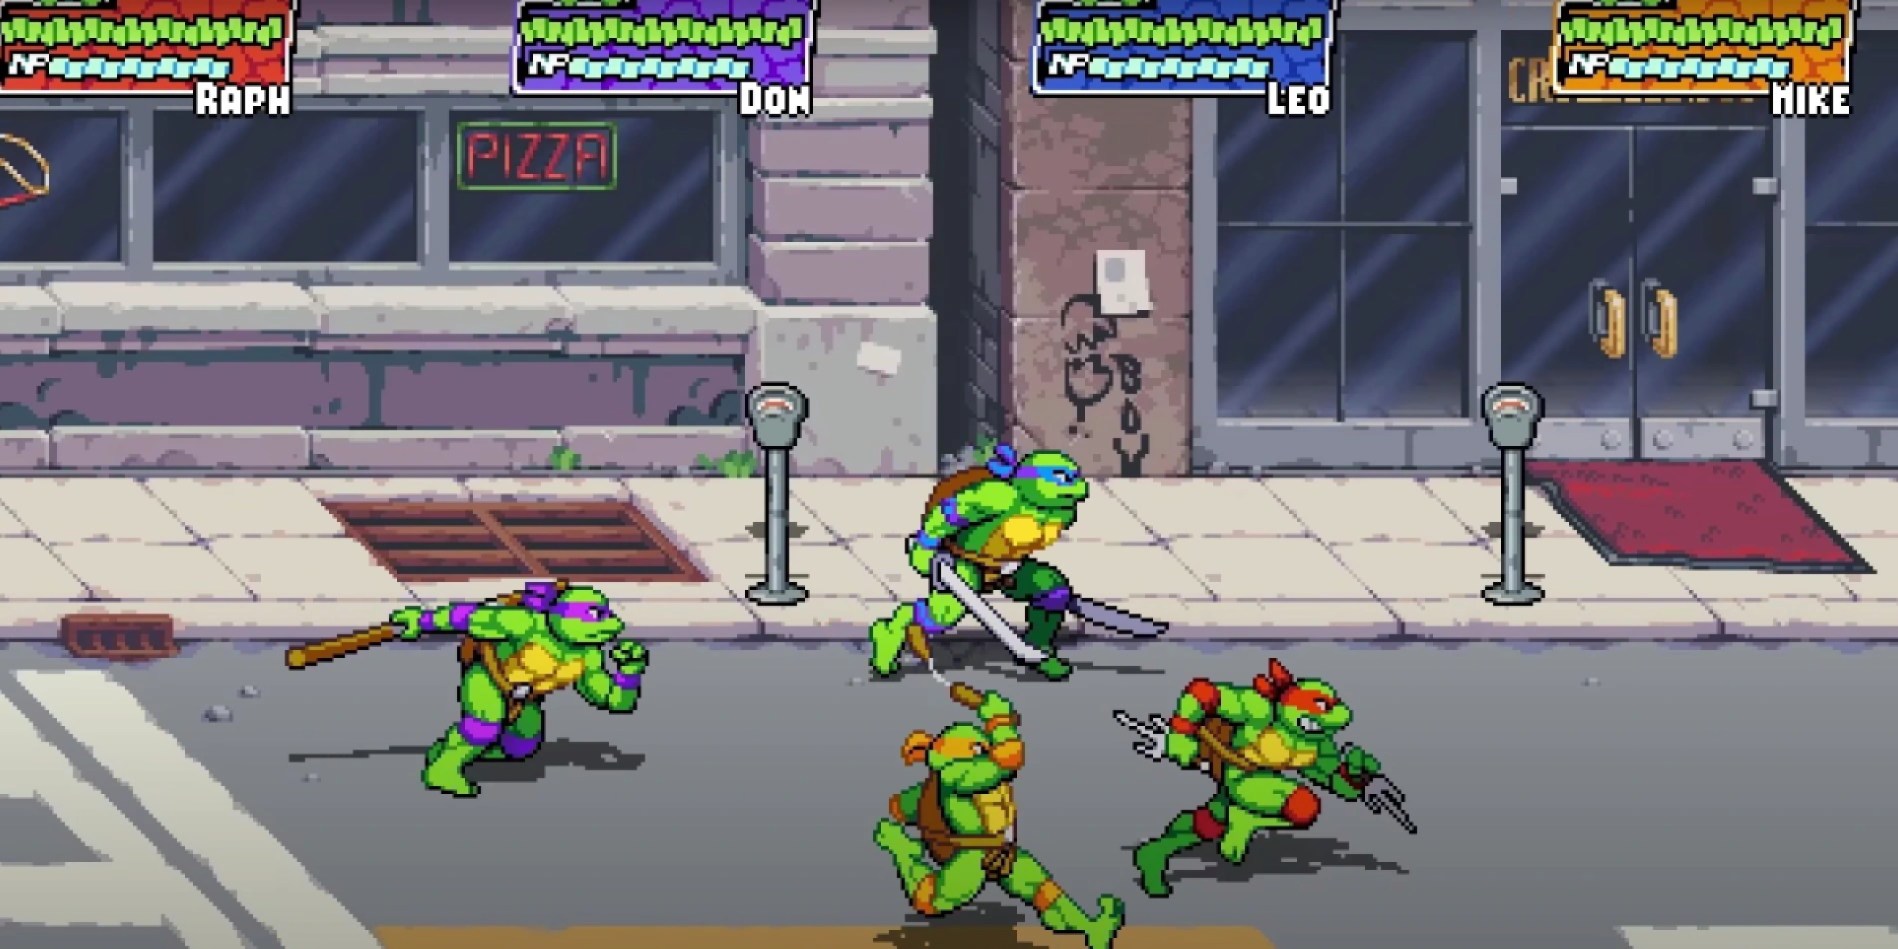 The Teenage Mutant Ninja Turtles fighting in the streets 